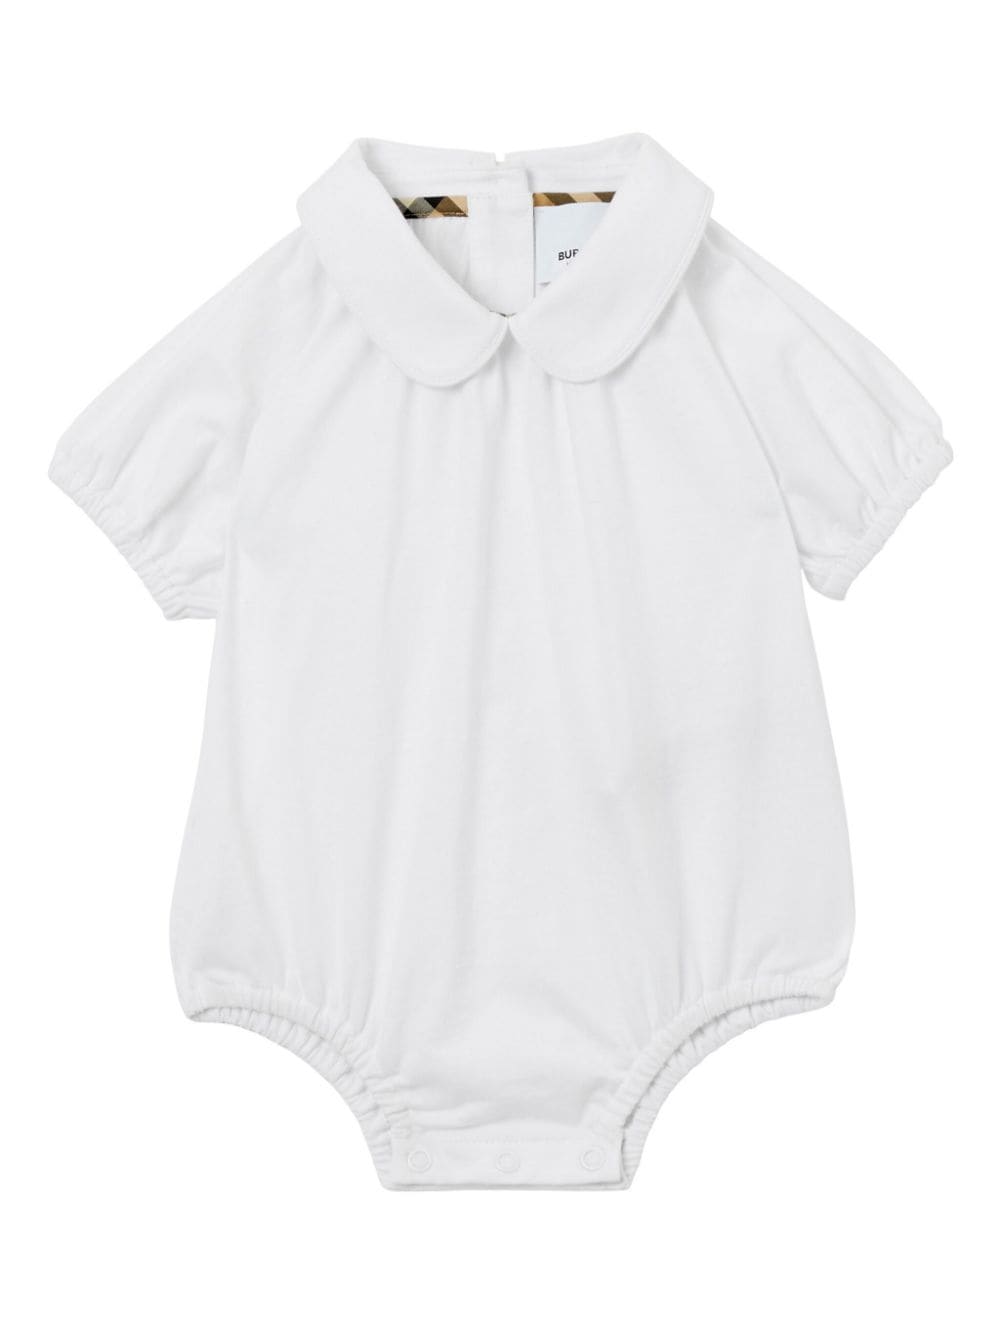 ODESSA cotton bodysuit dungaree and headband baby girl BURBERRY set | Carofiglio Junior